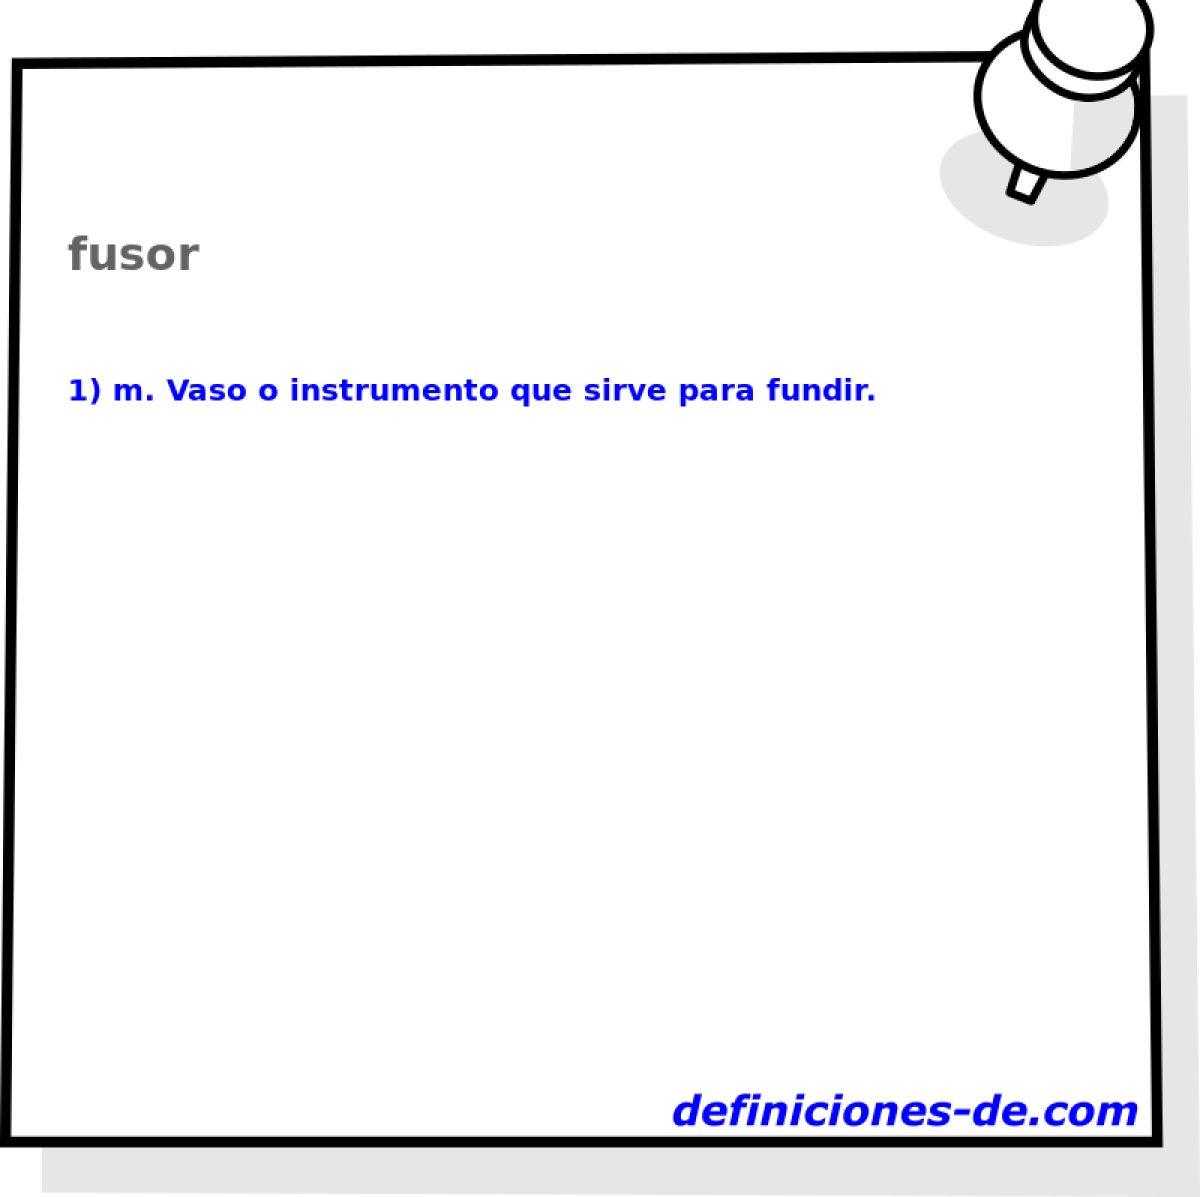 fusor 